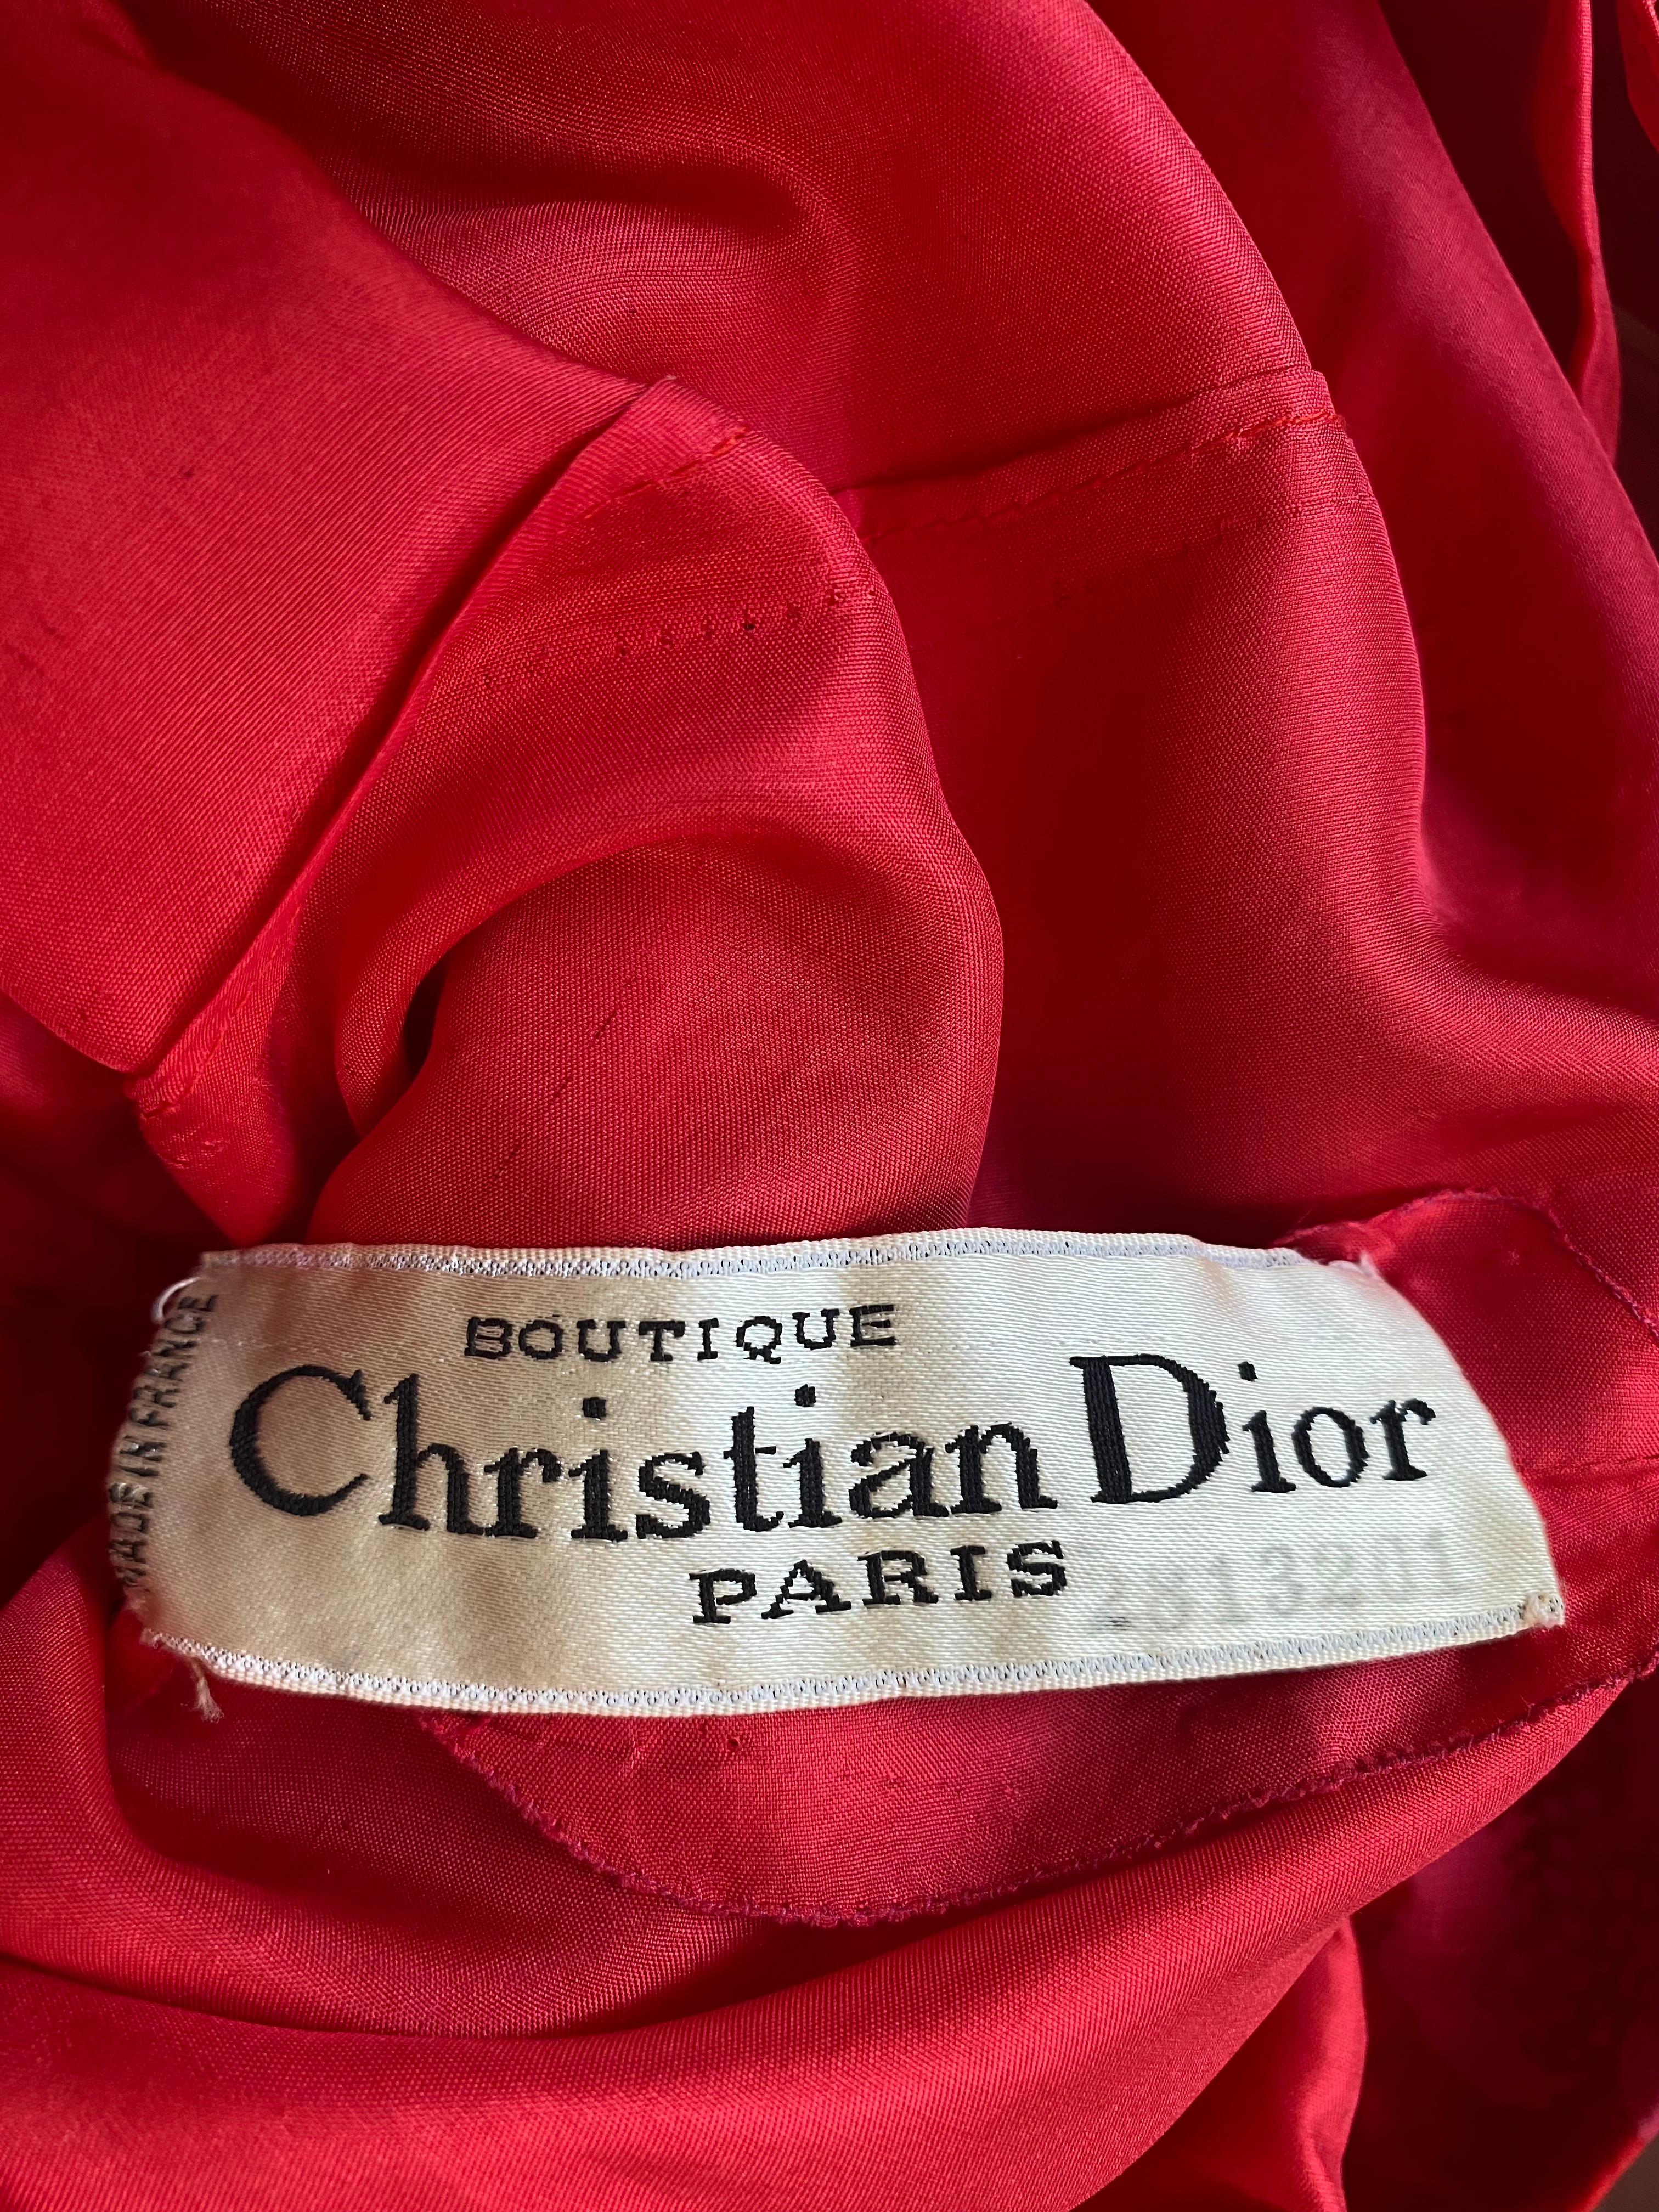 1950s Christian Dior Paris Pink Silk Damask Dress For Sale 2